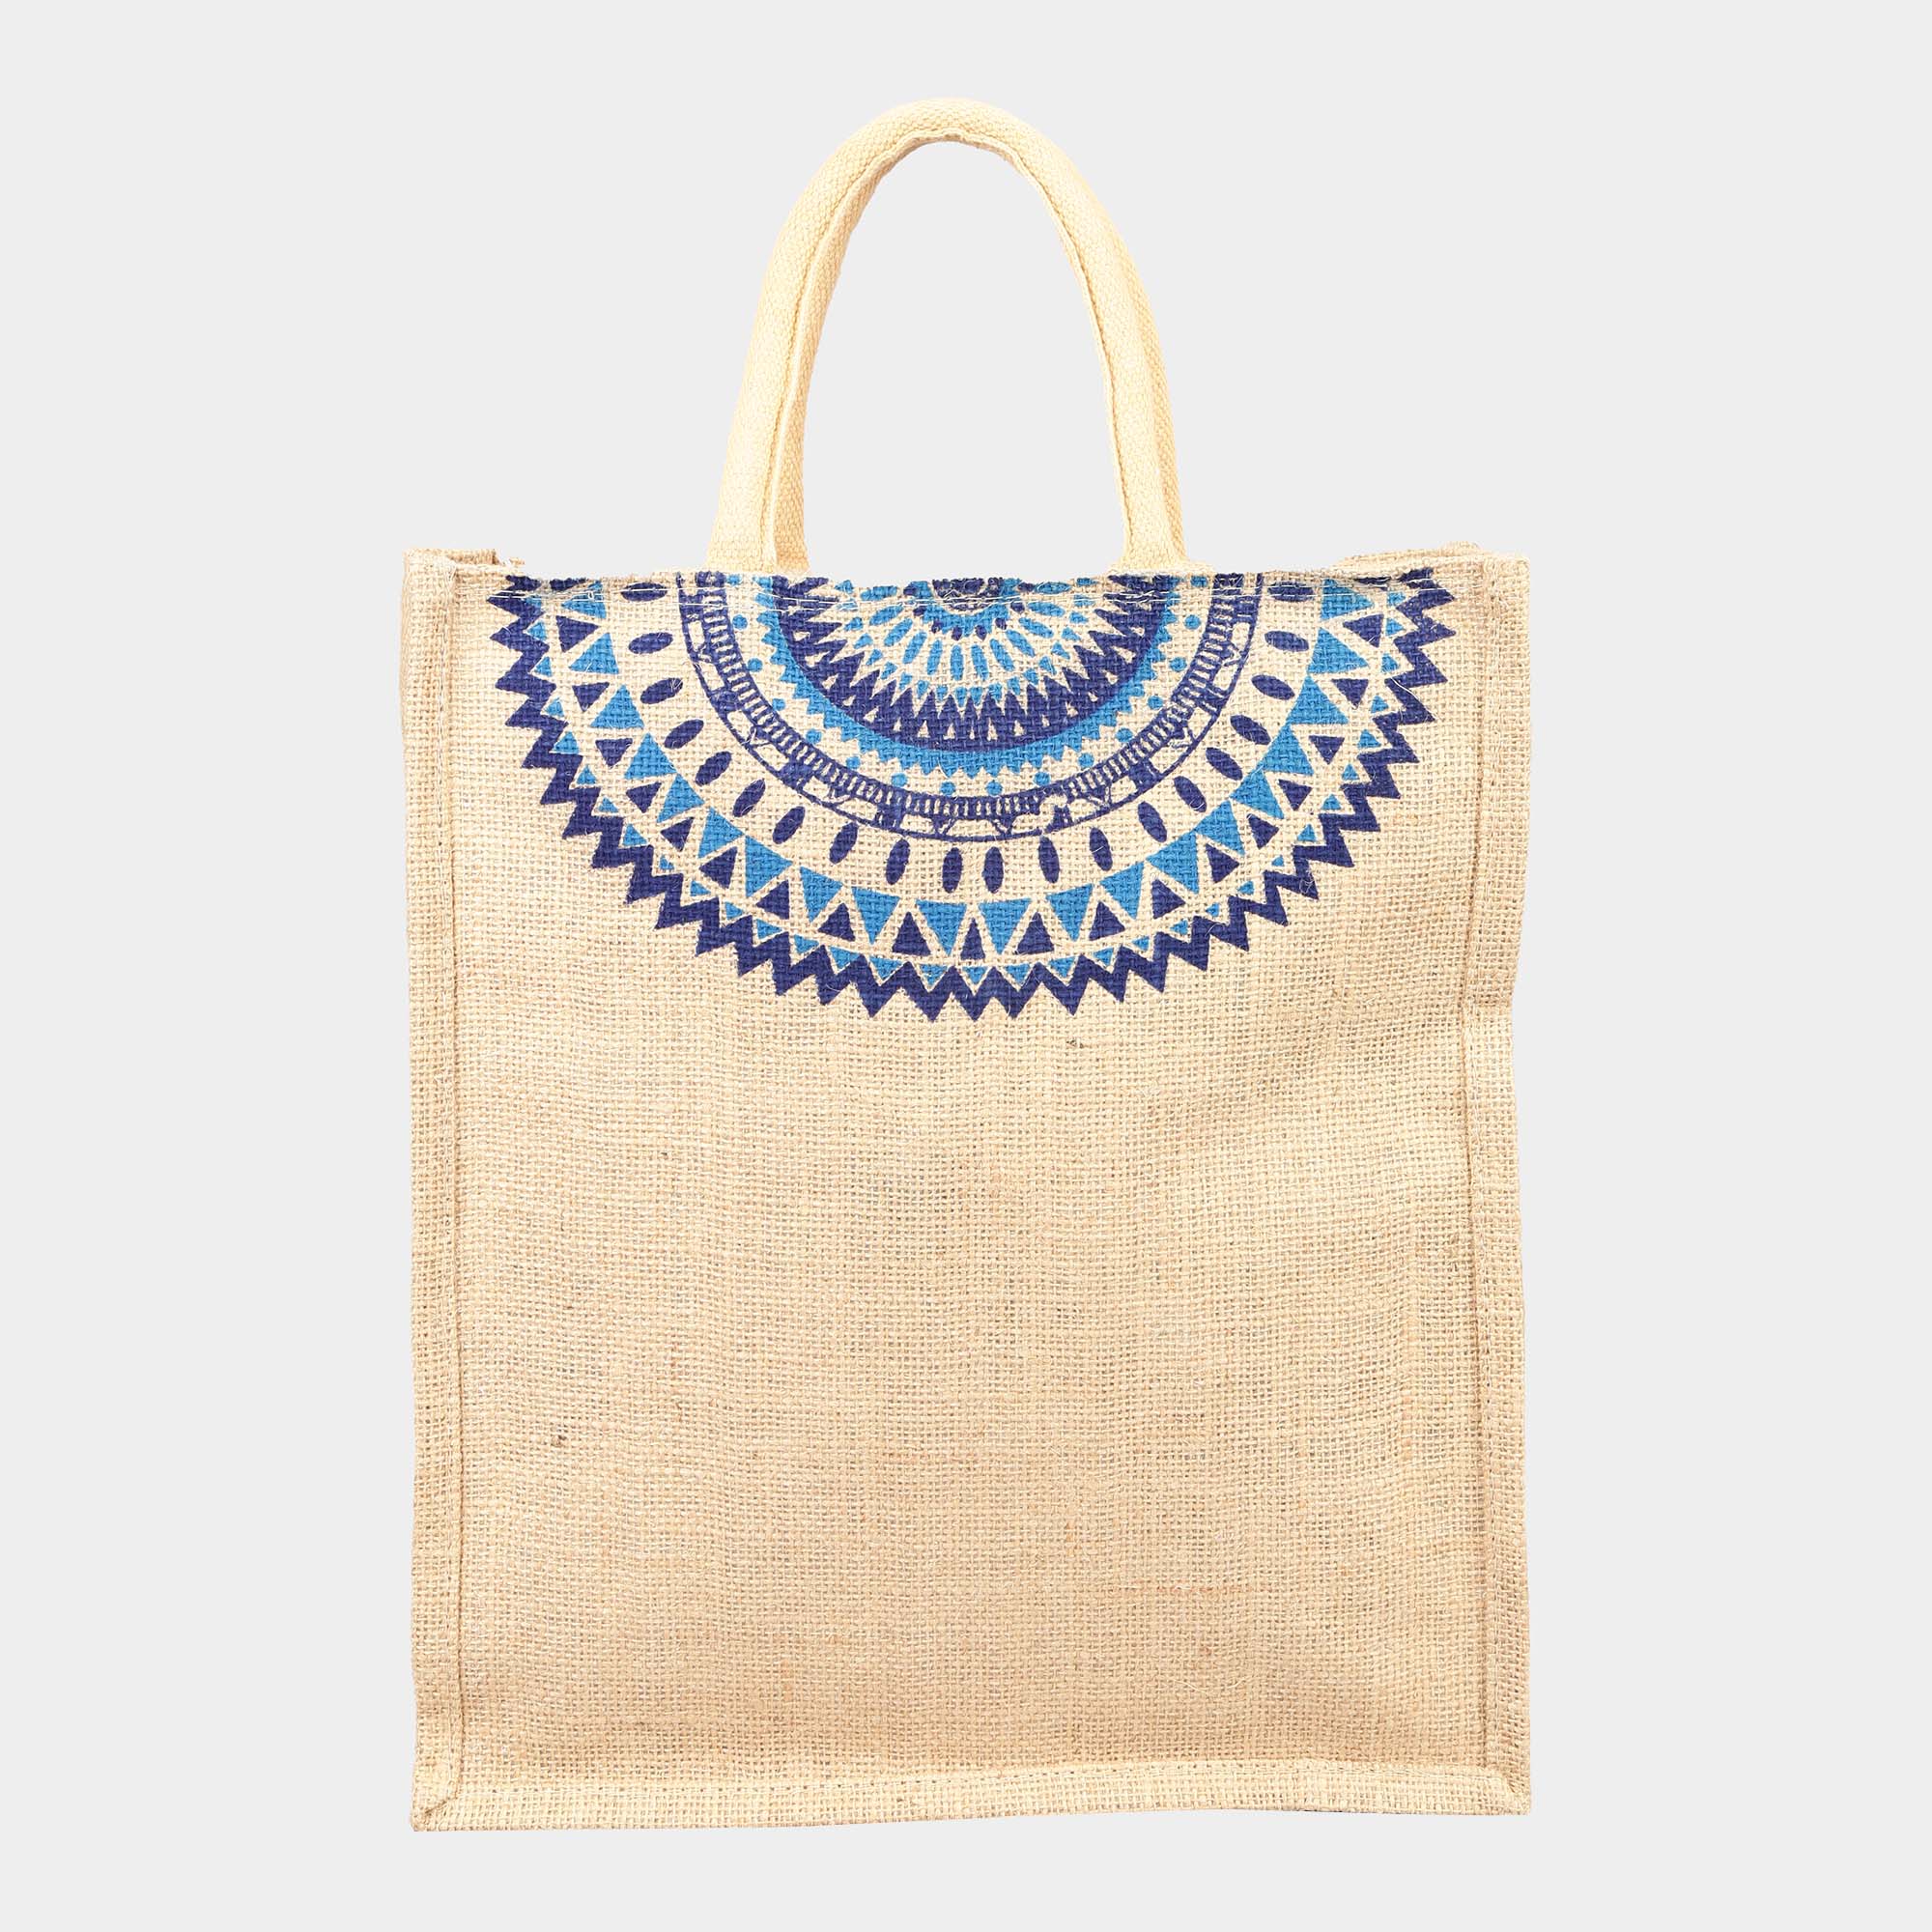 Regular Hand Bag Ladies Jute Purse, Size: 30x30 cm at Rs 360/piece in Jaipur